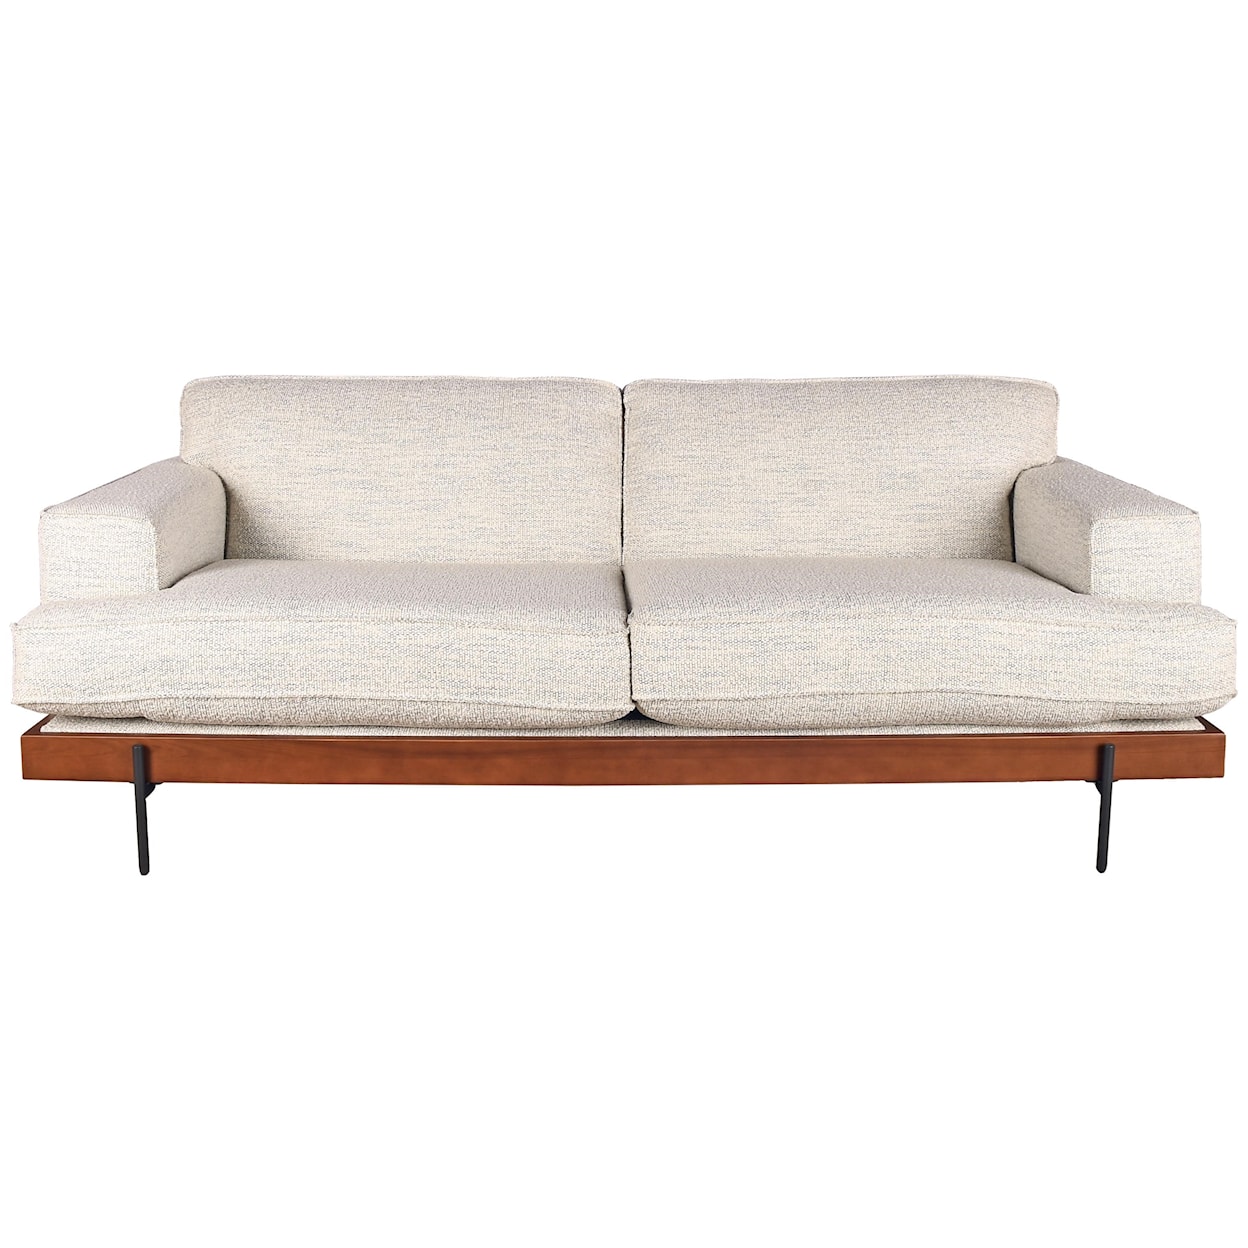 Maric Furniture Merino Industrial Sofa